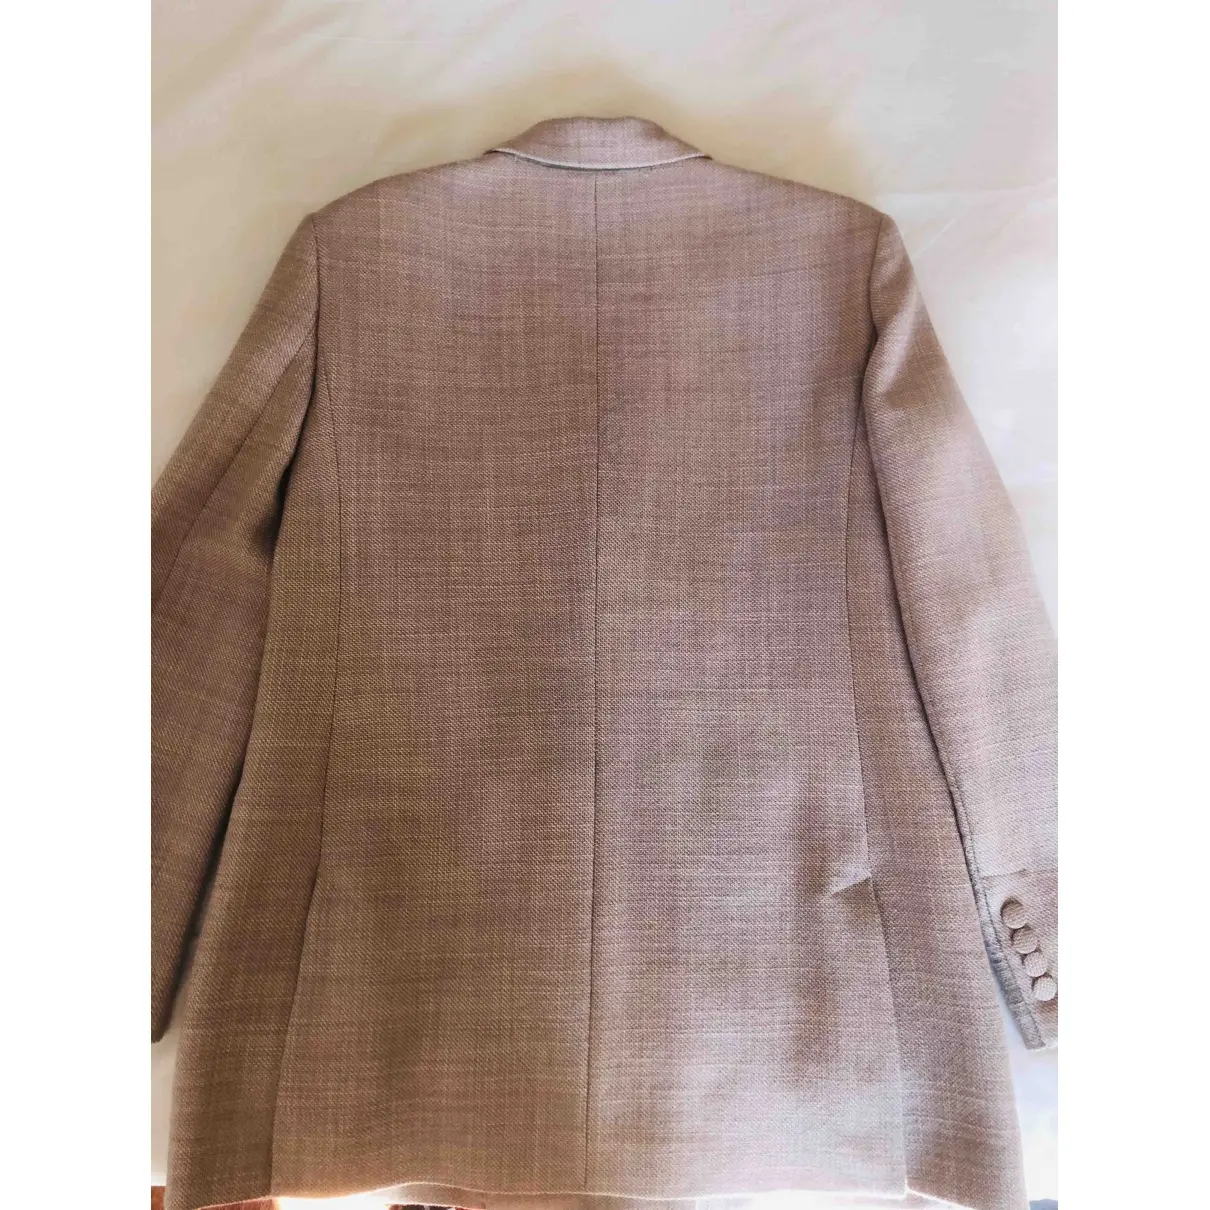 Agnona Wool blazer for sale